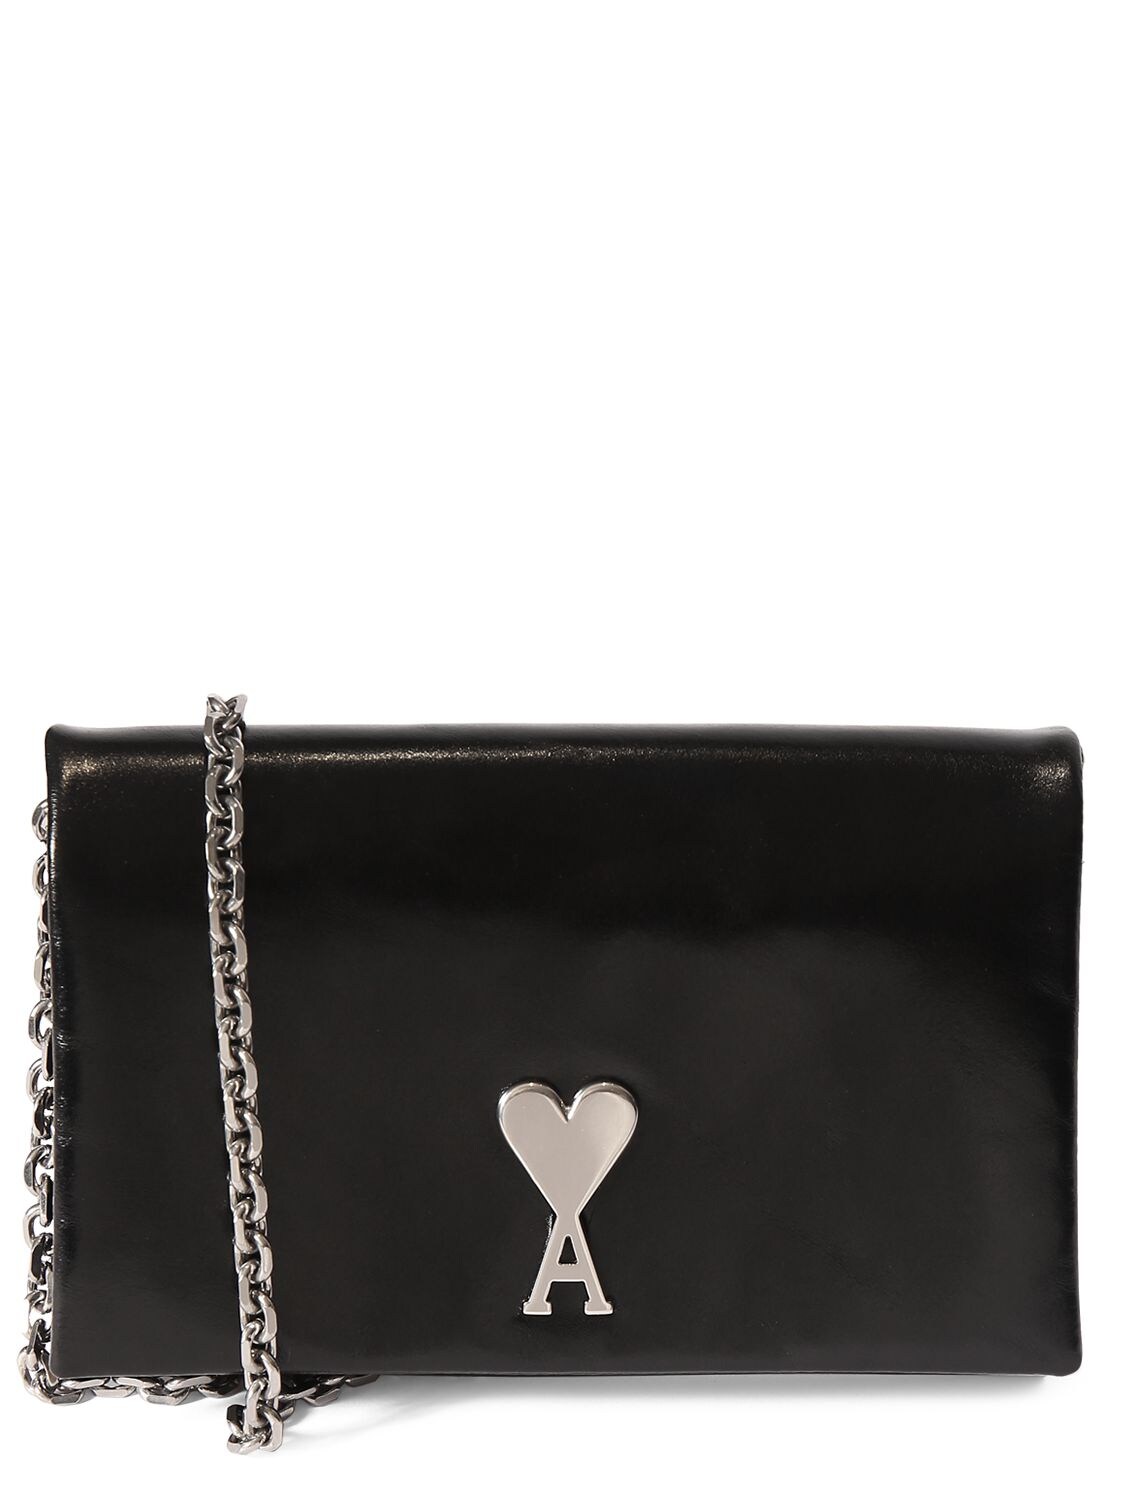 Image of Voulez Vous Leather Wallet W/ Chain